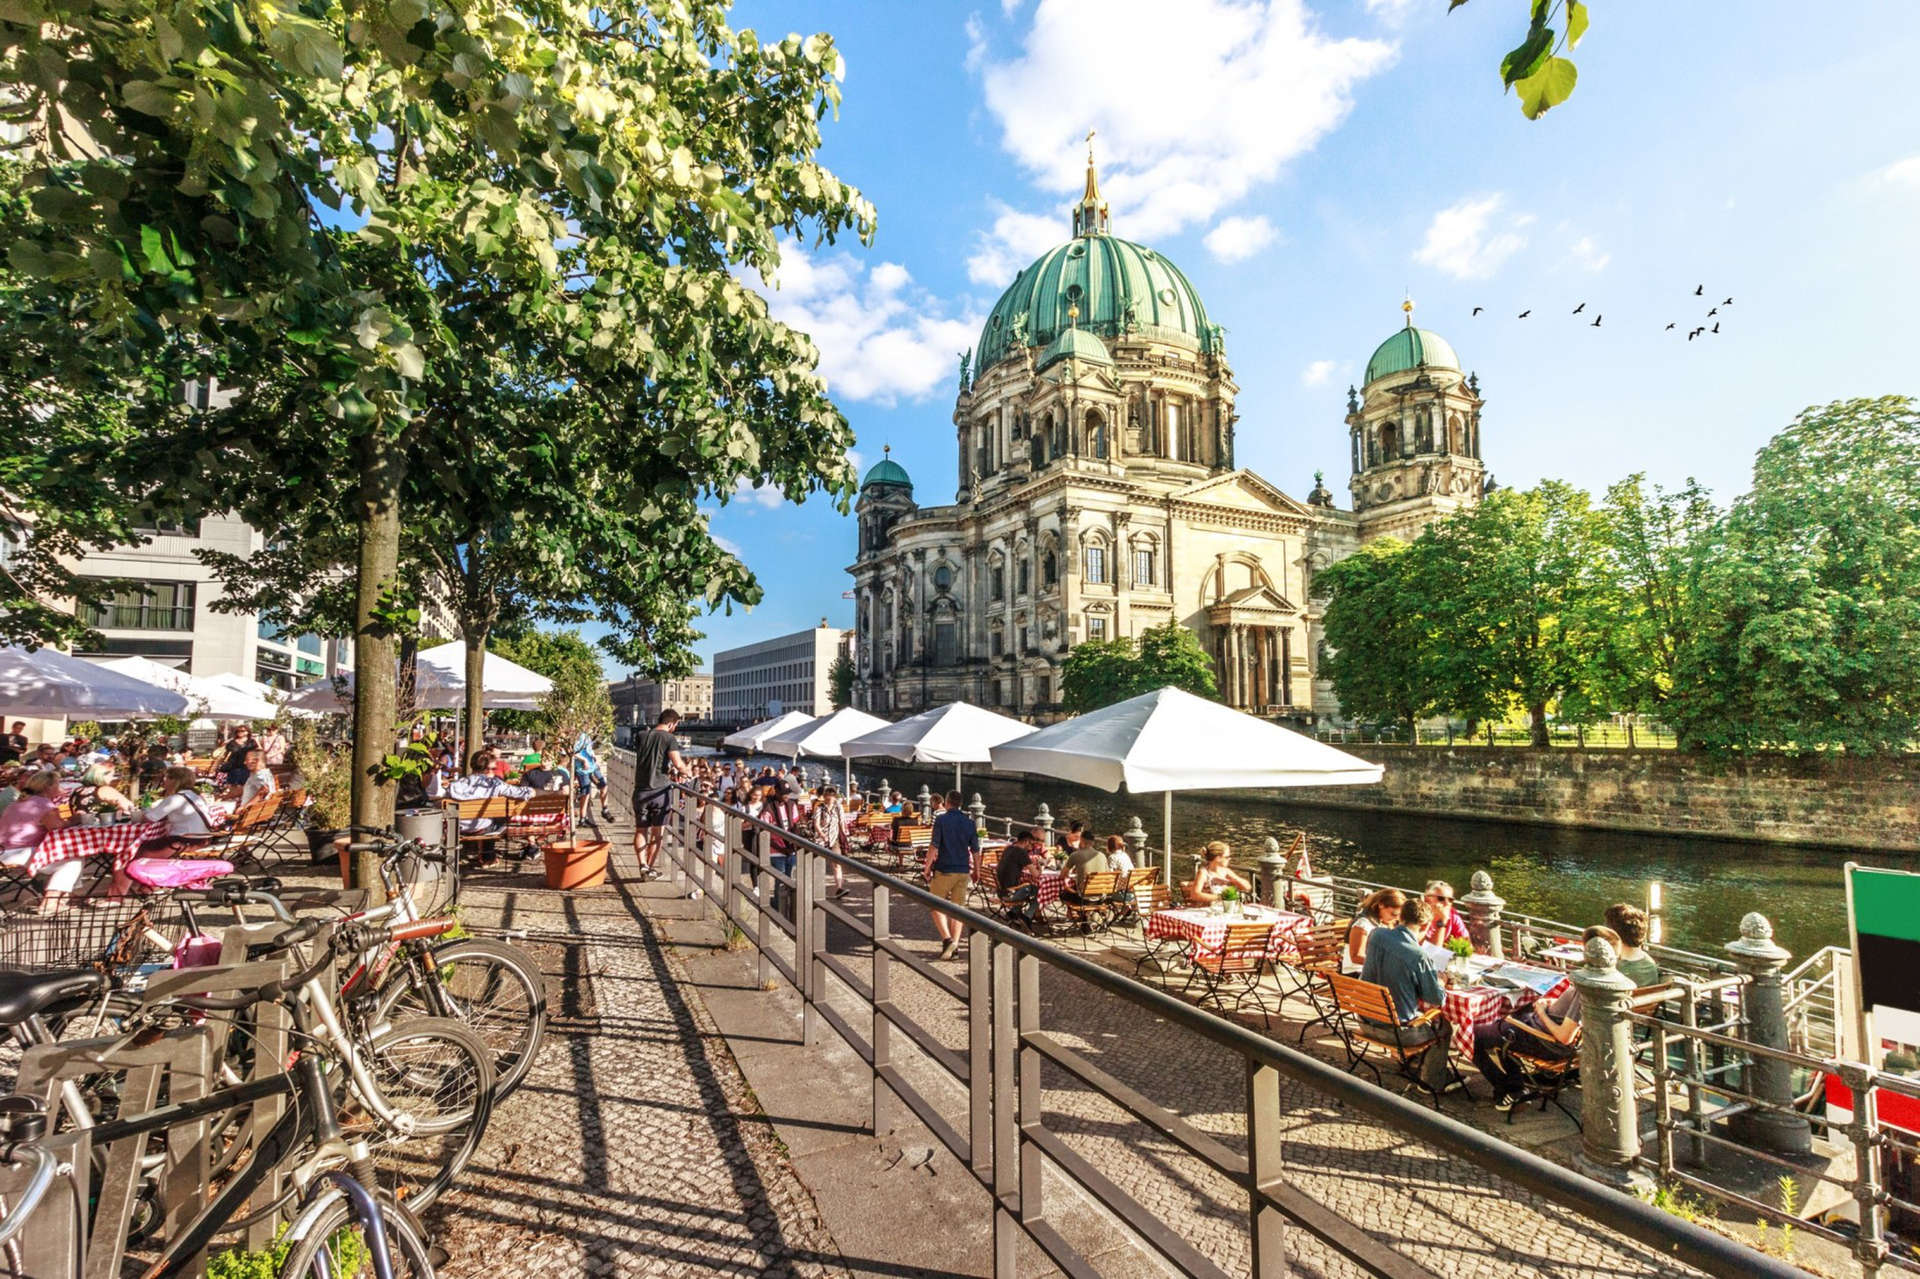 La rivière Spree et la cathédrale de Berlin, à Berlin, en Allemagne